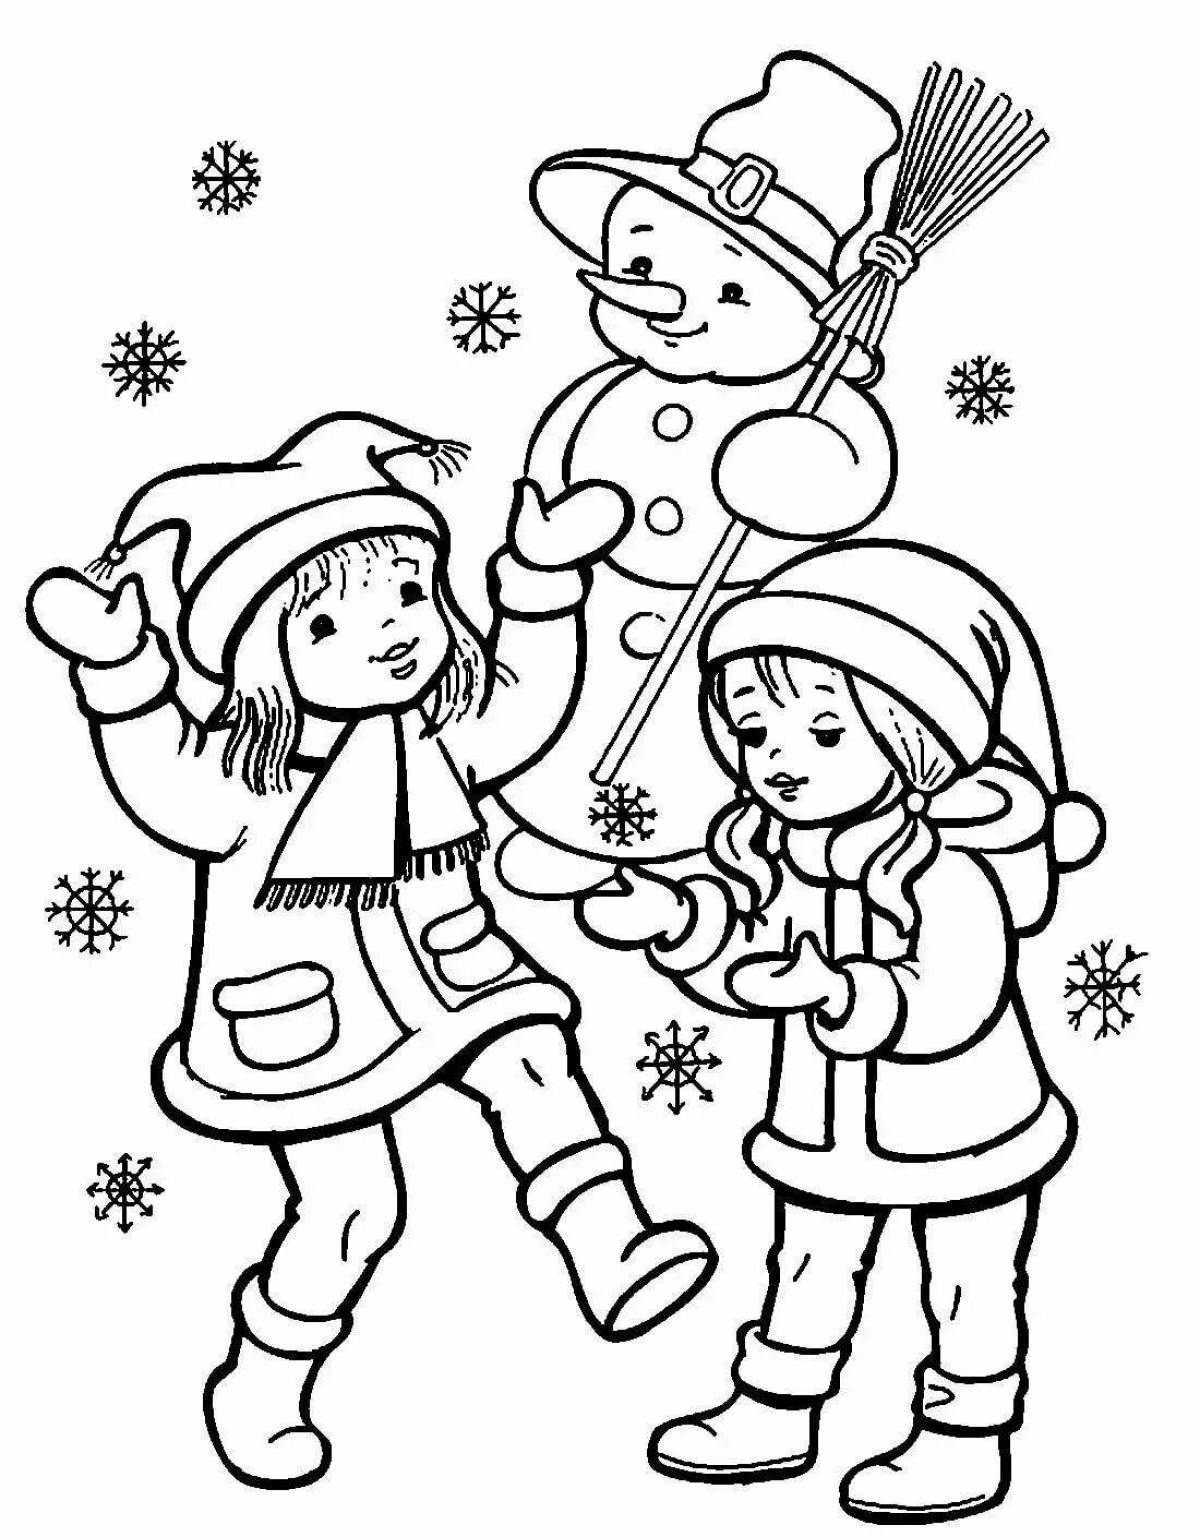 Children's winter coloring book